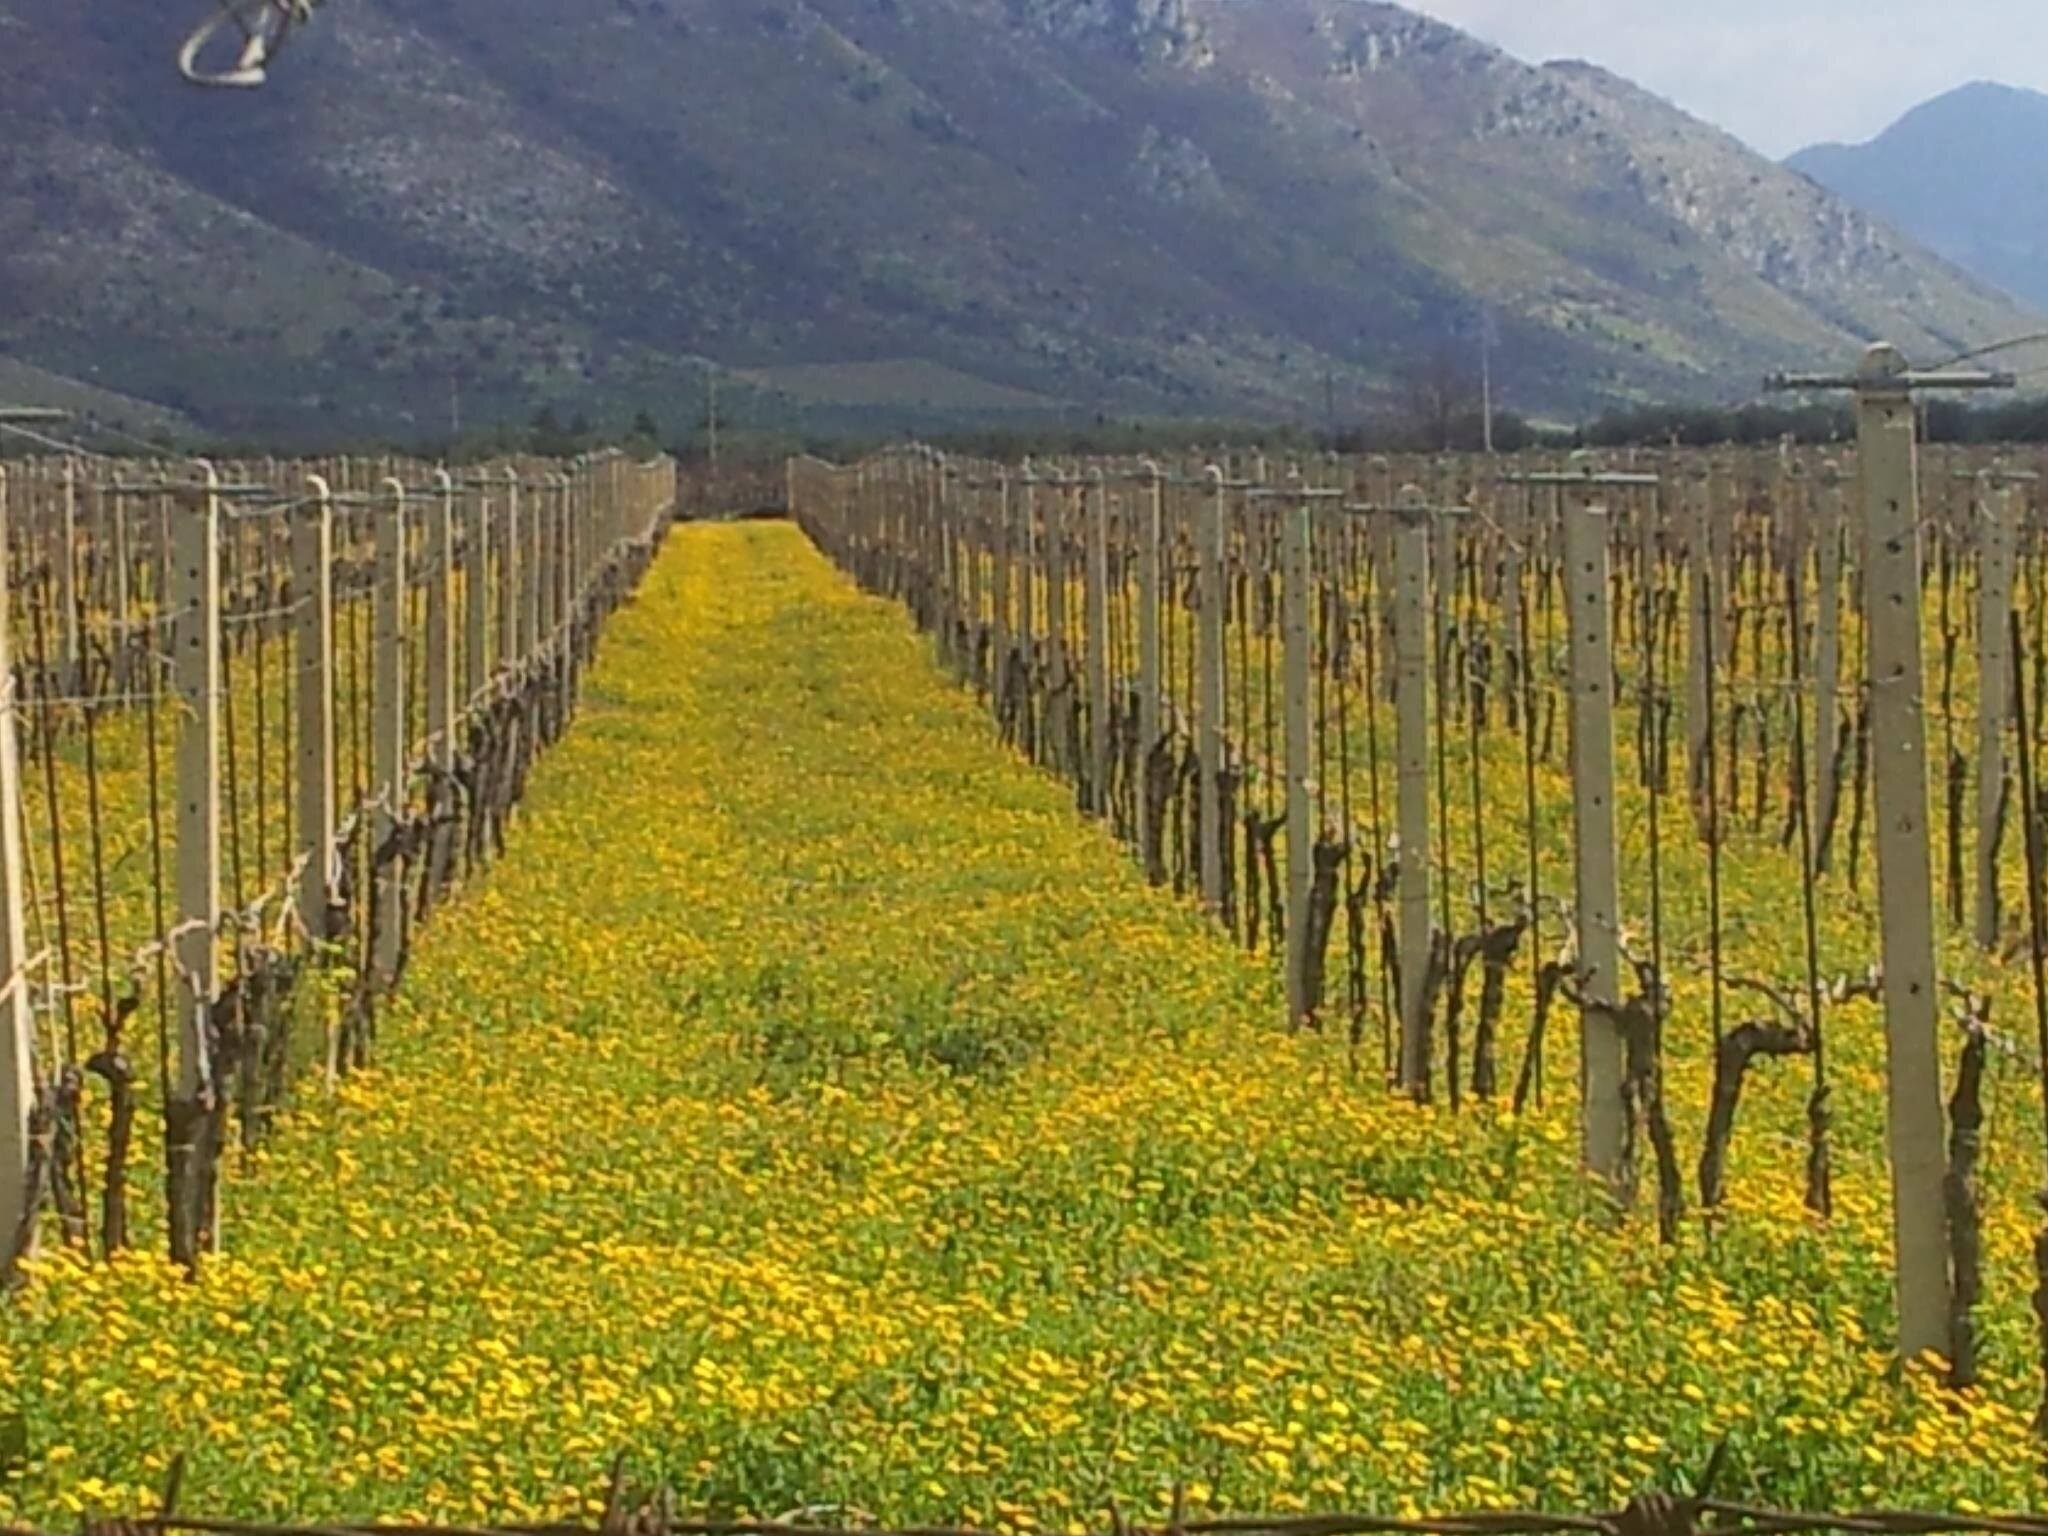 Cincinnato_vineyards with yellow flowers_Mar 2012.jpg